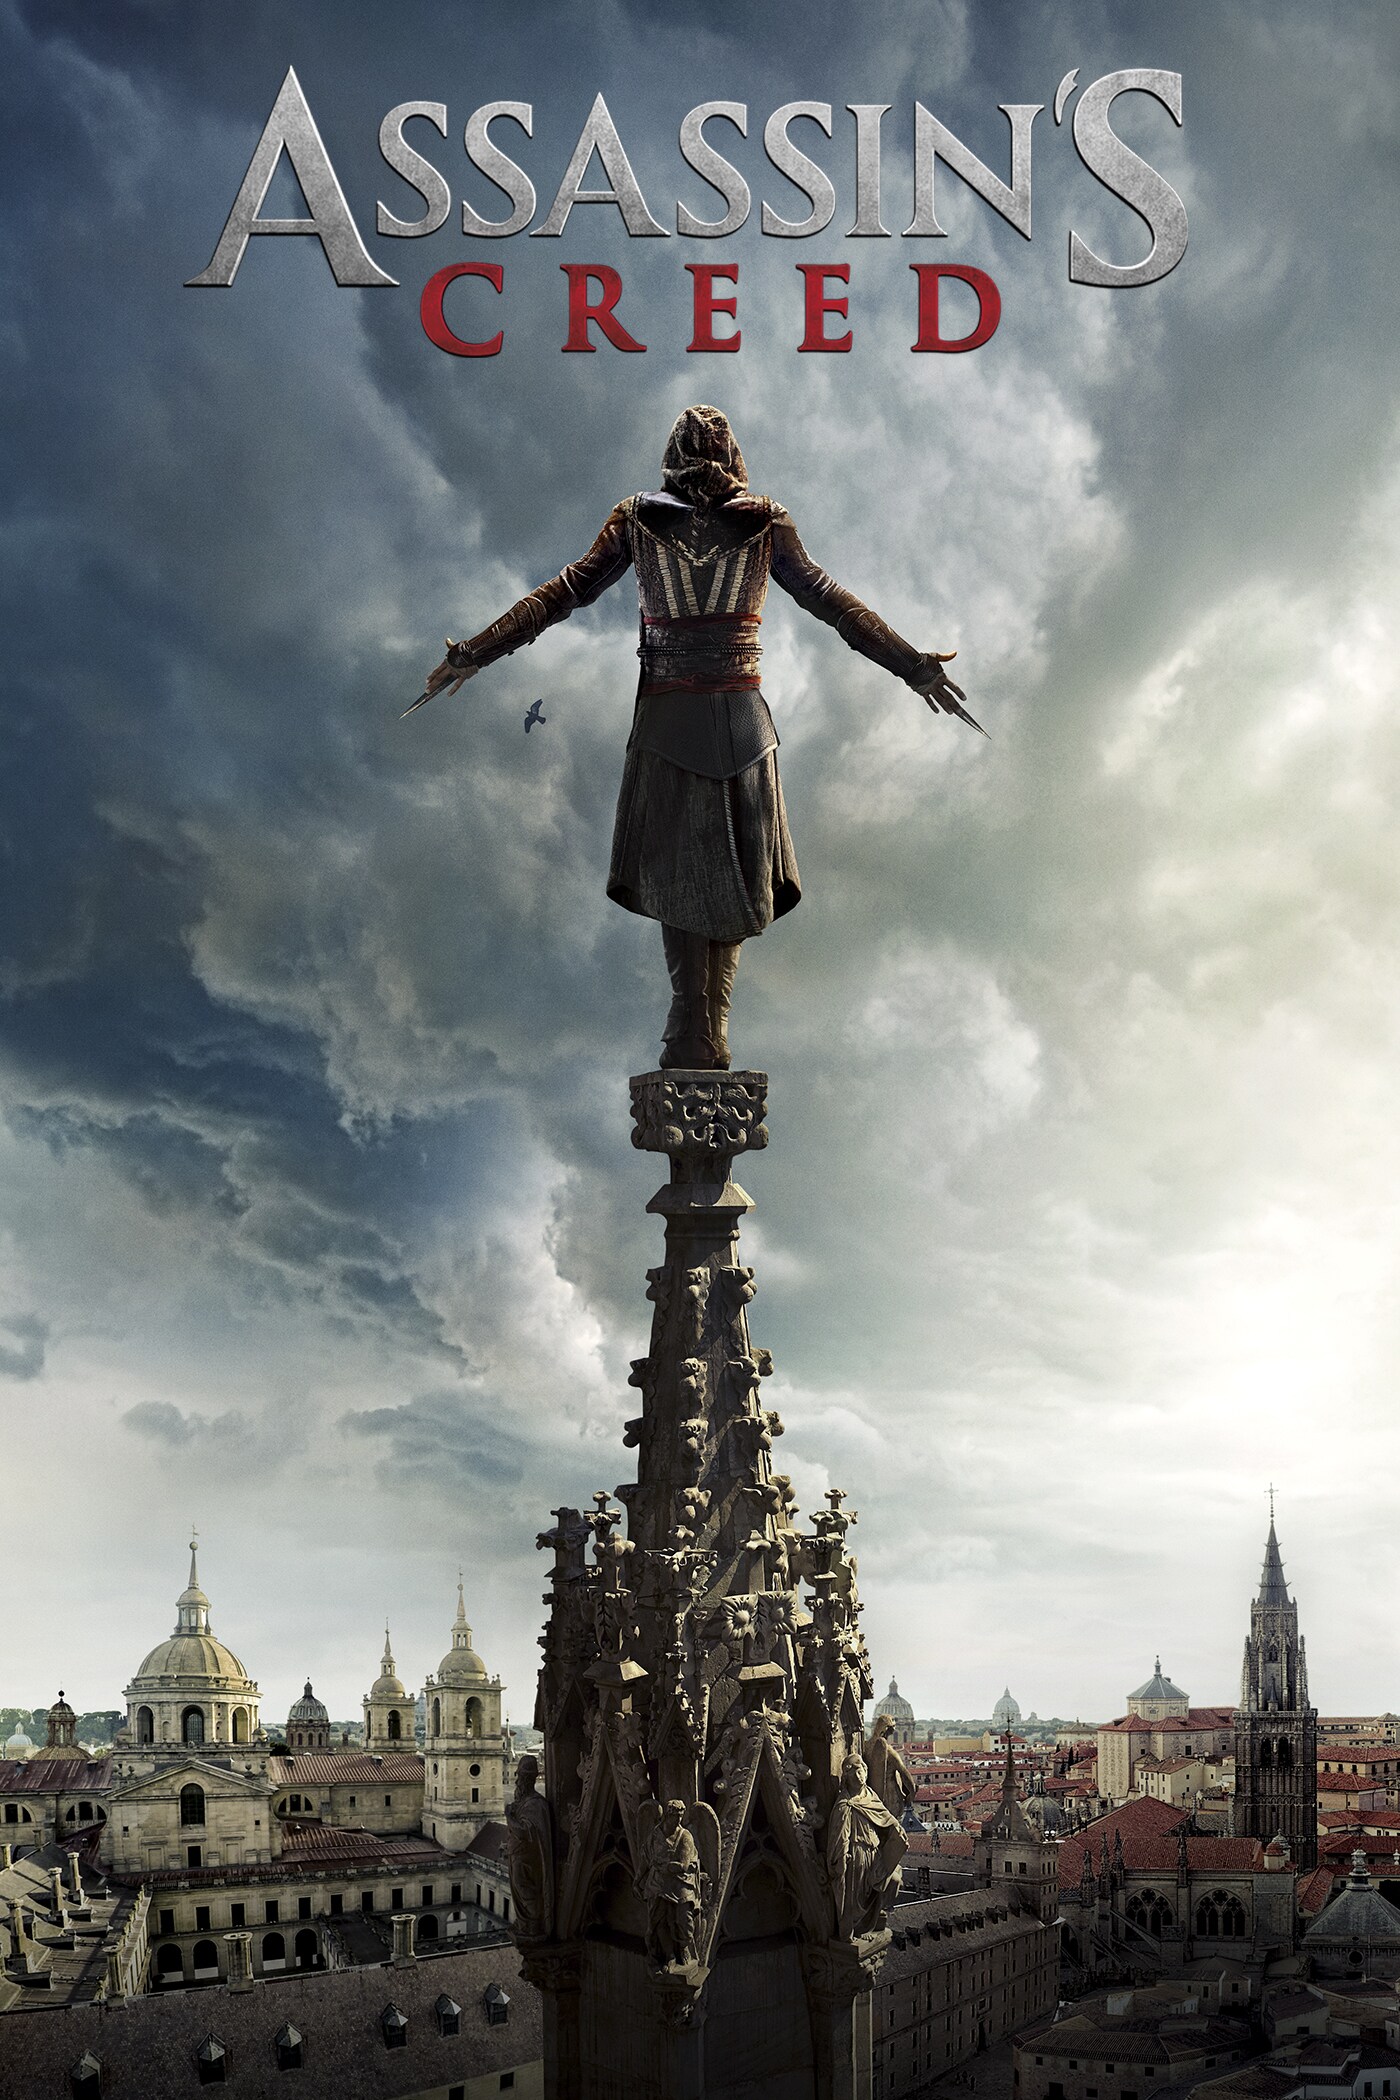  Assassin's Creed : Michael Fassbender, Marion